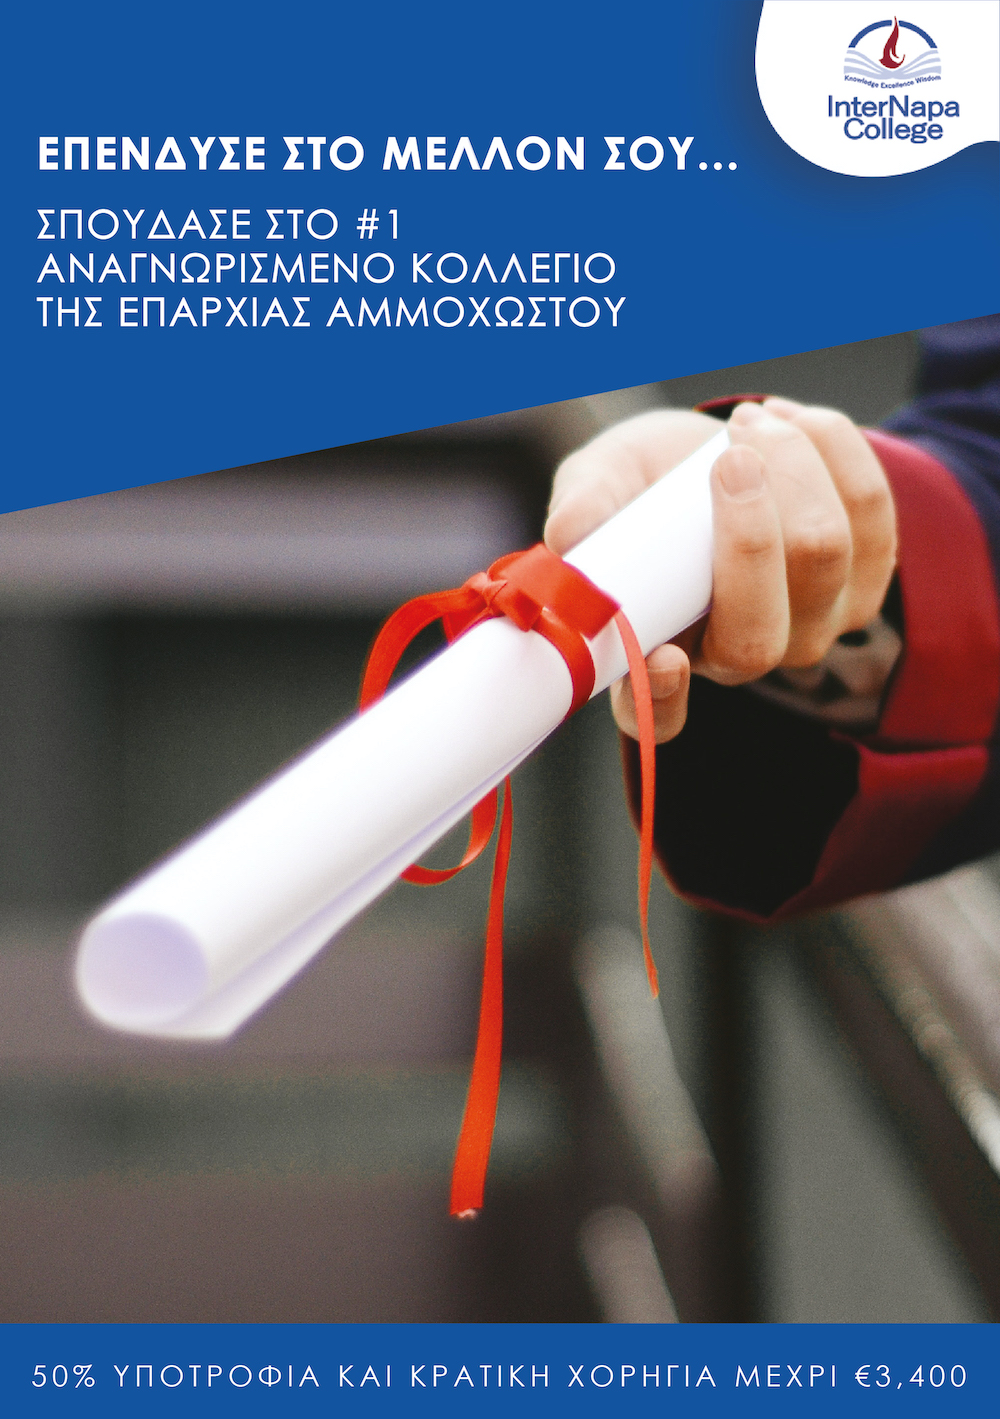 A4LEAFLET GREEK 1 01 01 Advertorial, Internapa College, Education, studies